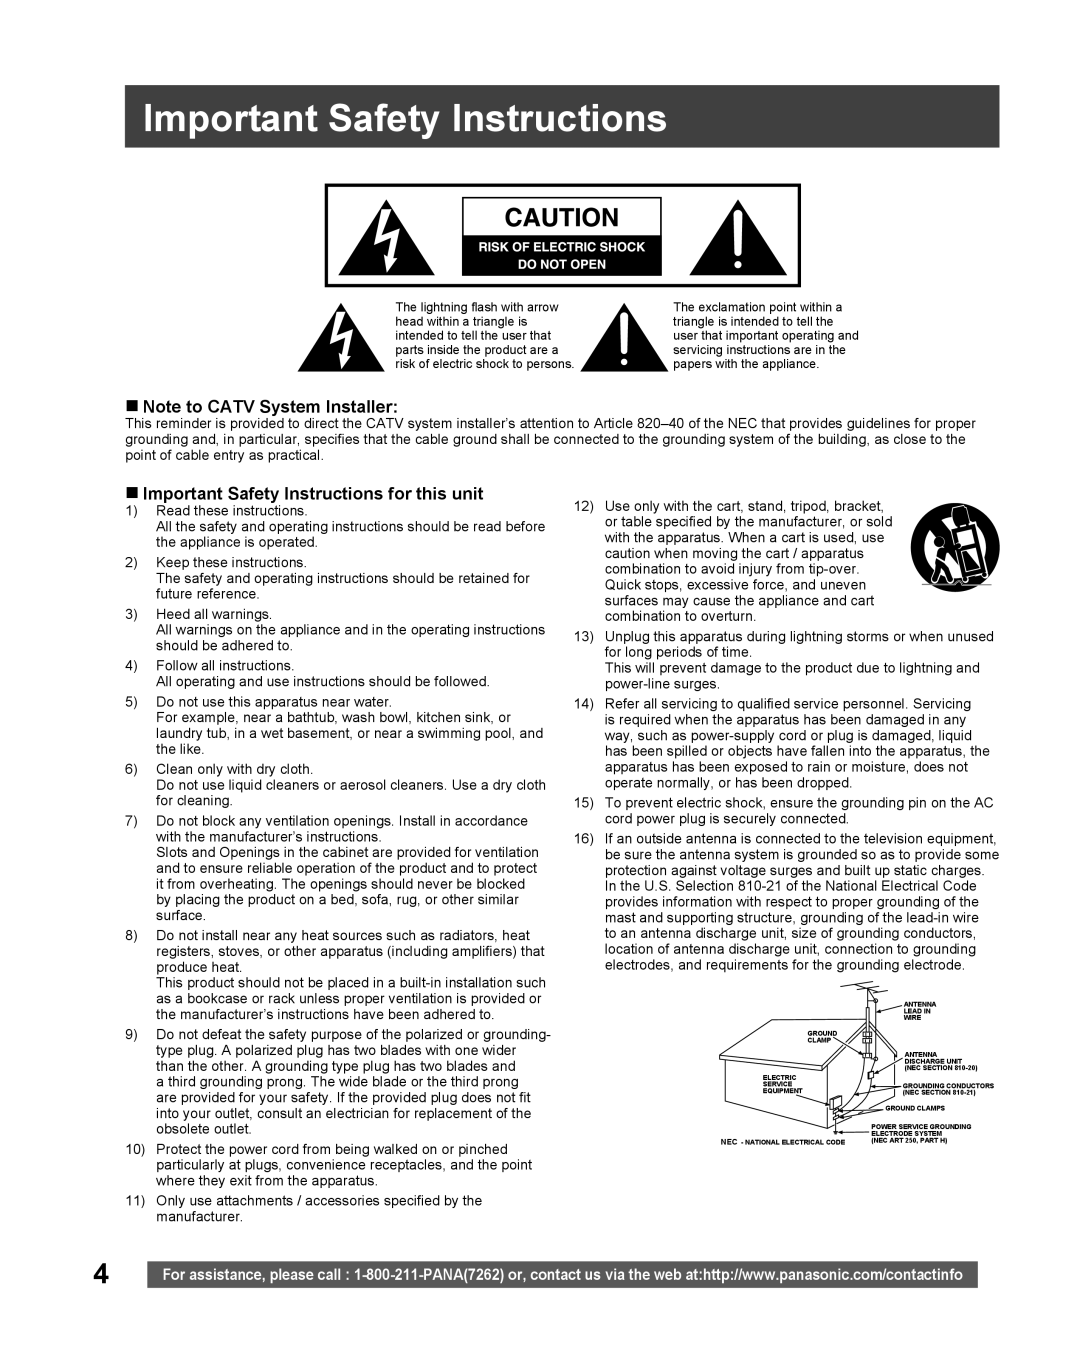 Panasonic TC 22LR30 manual Important Safety Instructions, Note to CATV System Installer 